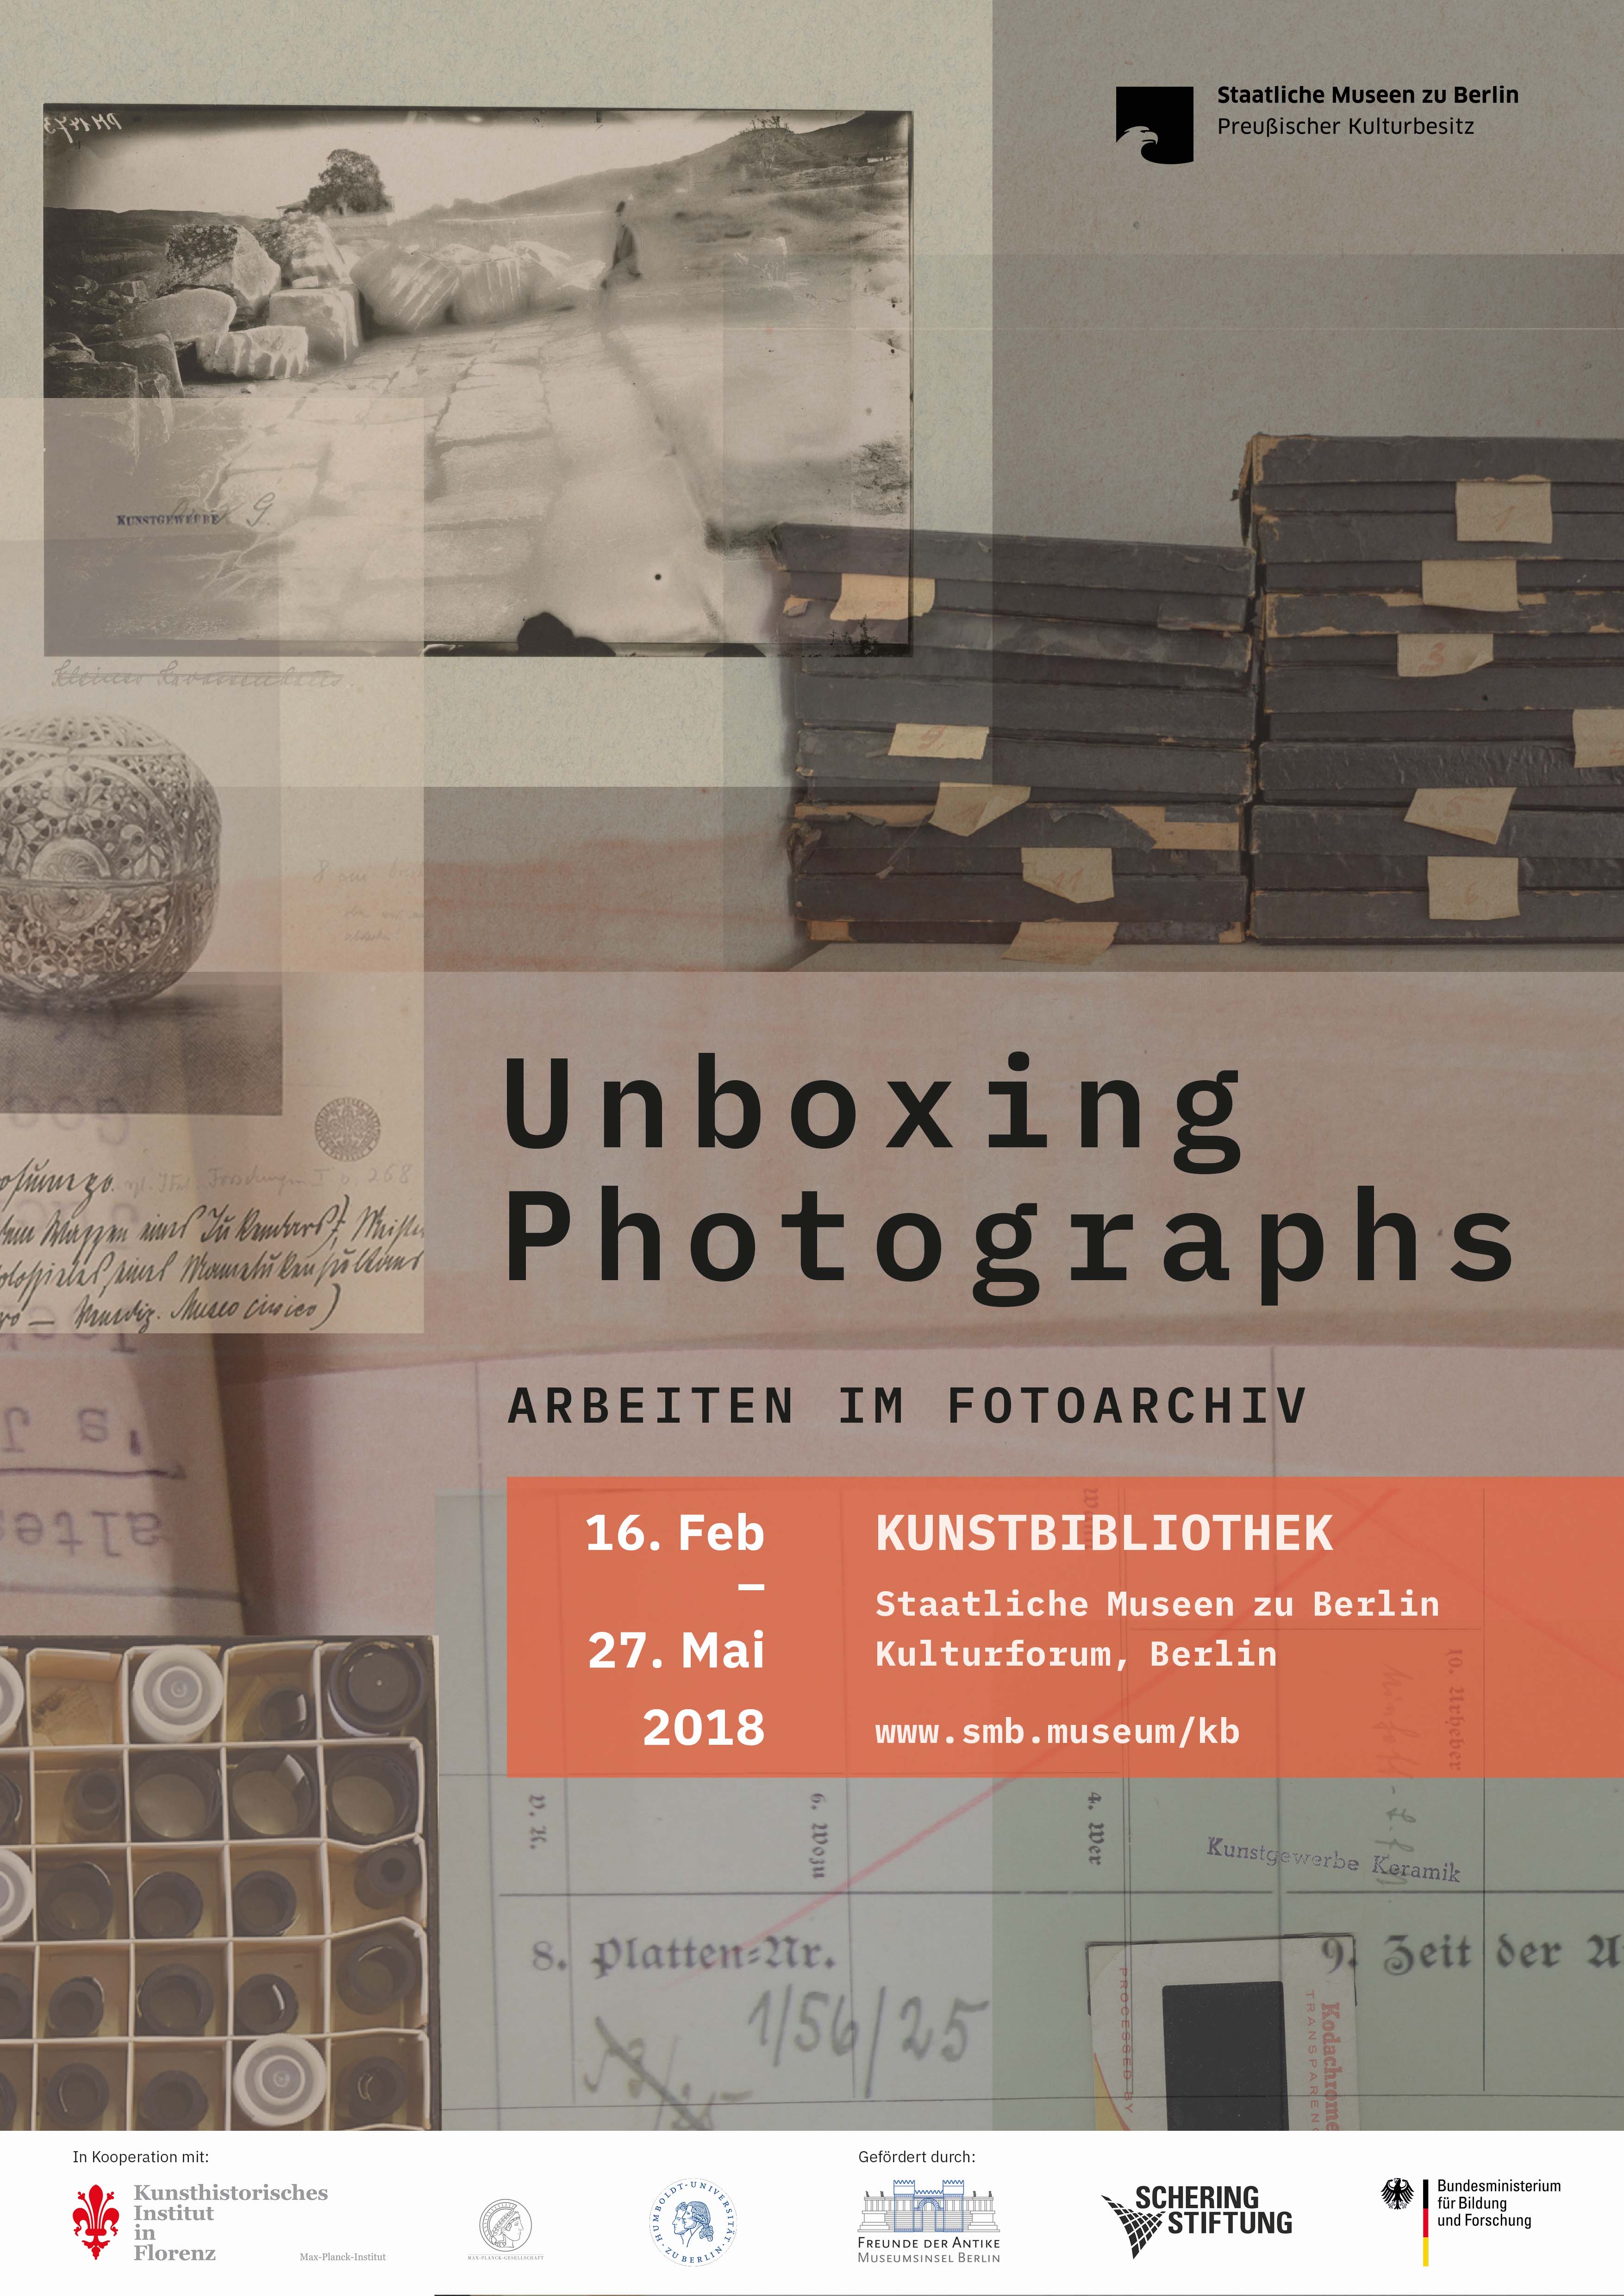 Plakat zur Ausstellung "Unboxing Photographs"